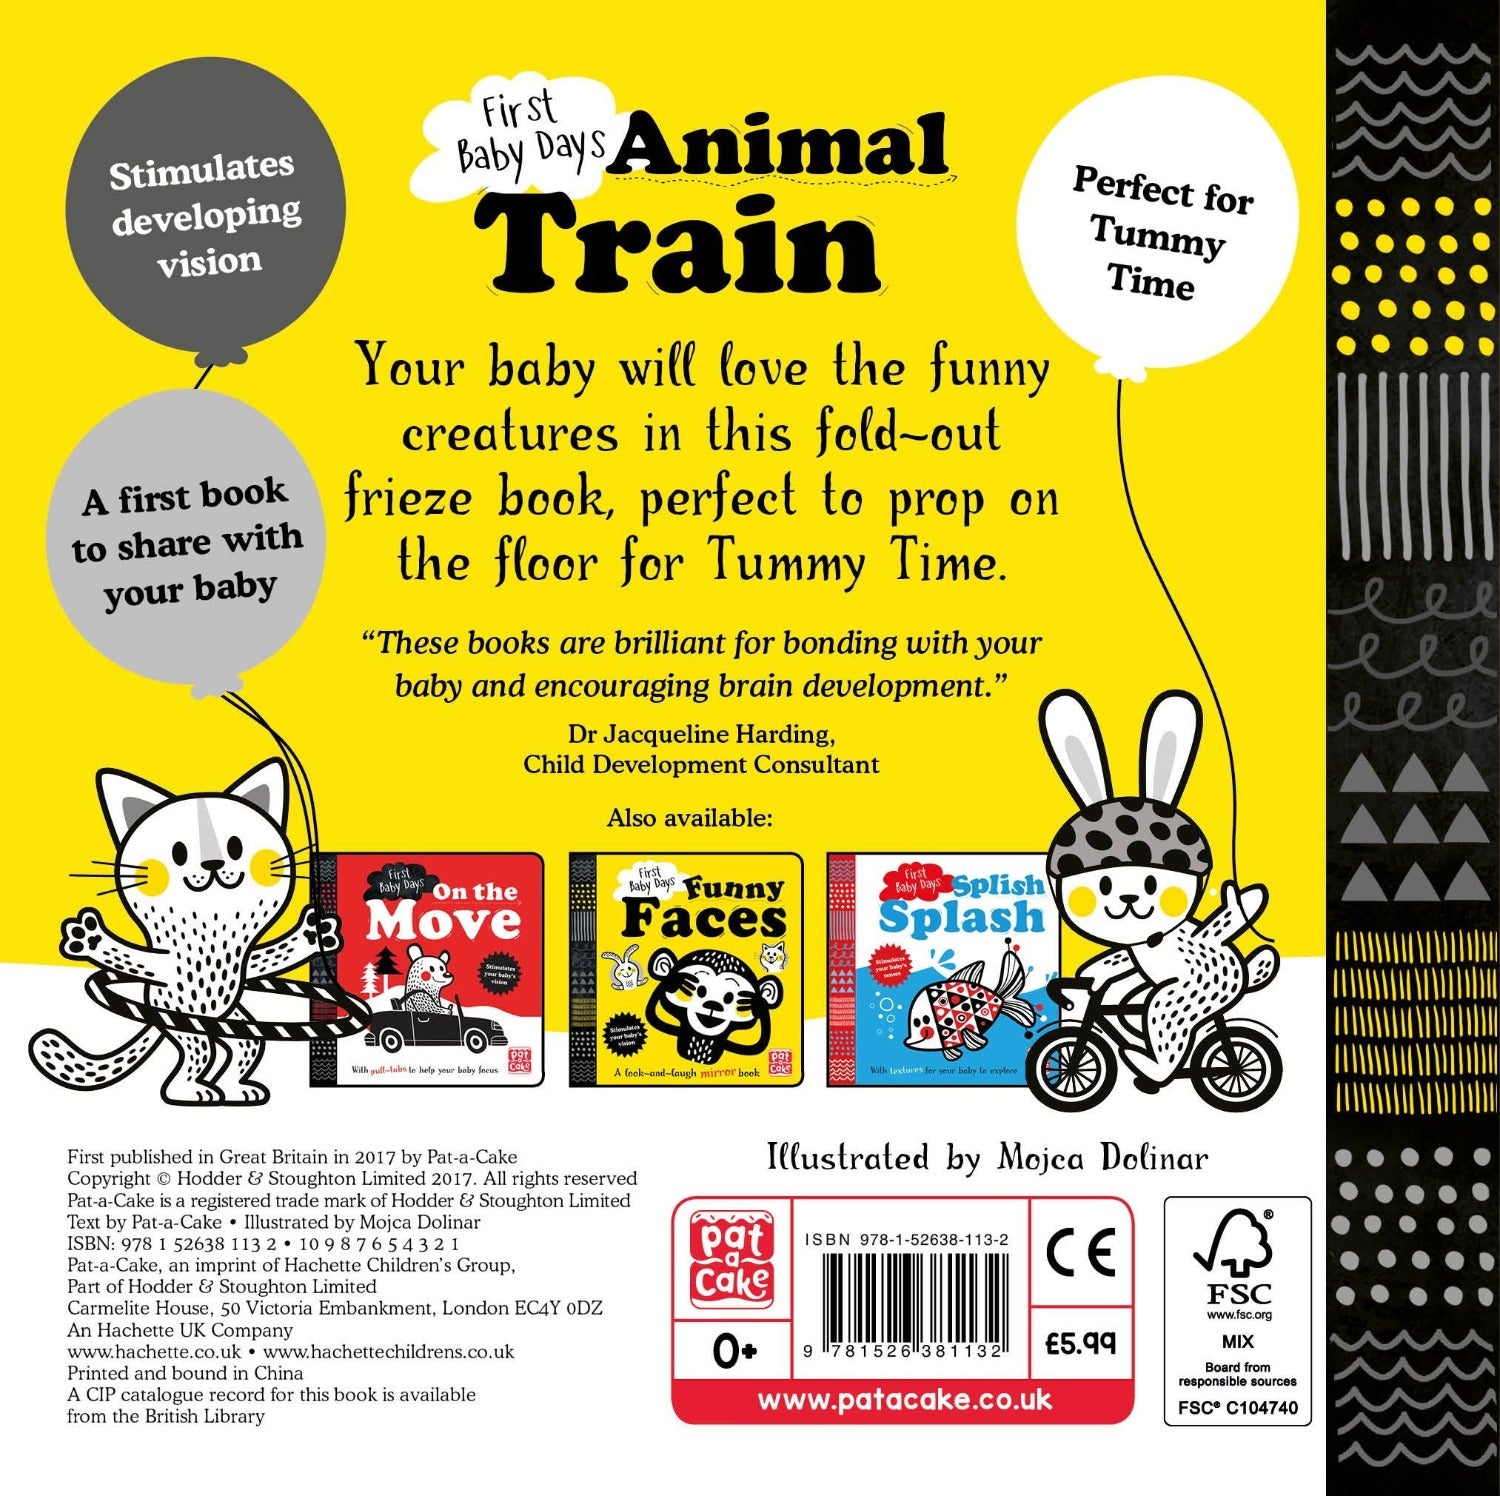 Pat-a-Cake Animal Train Book